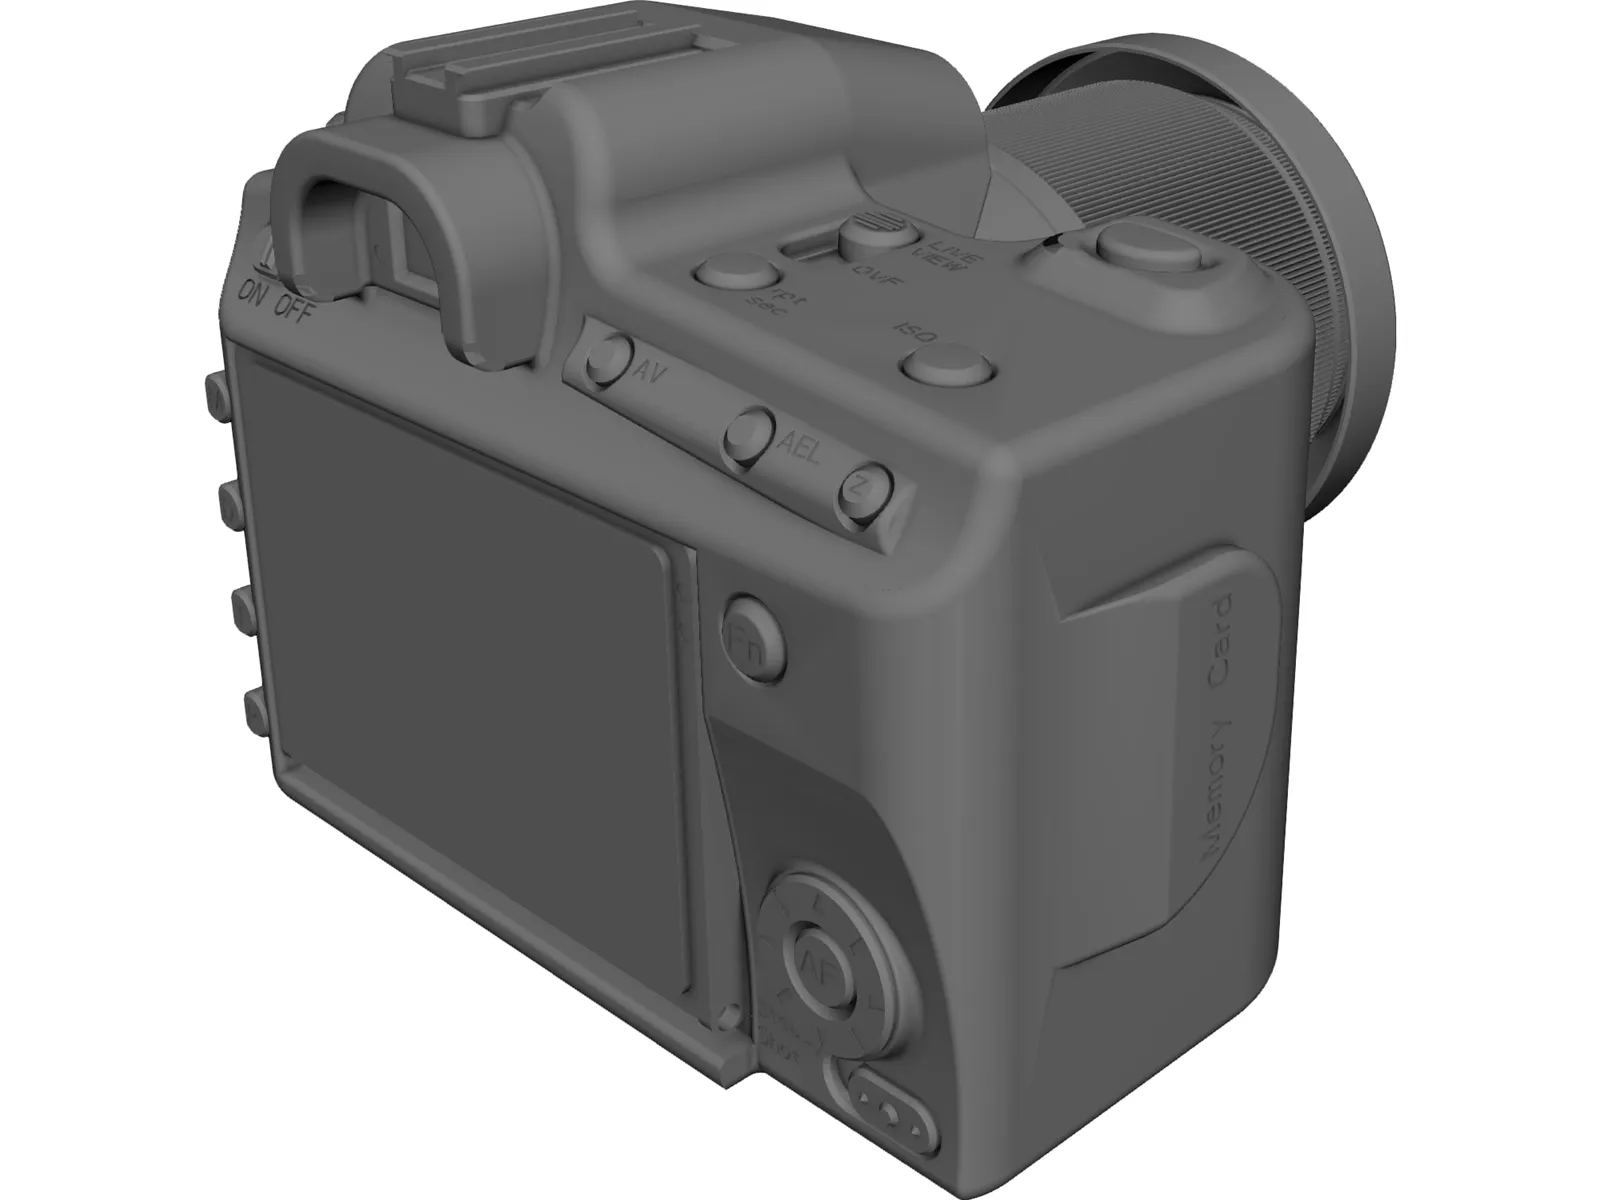 Sony Alpha 300 Camera 3D Model